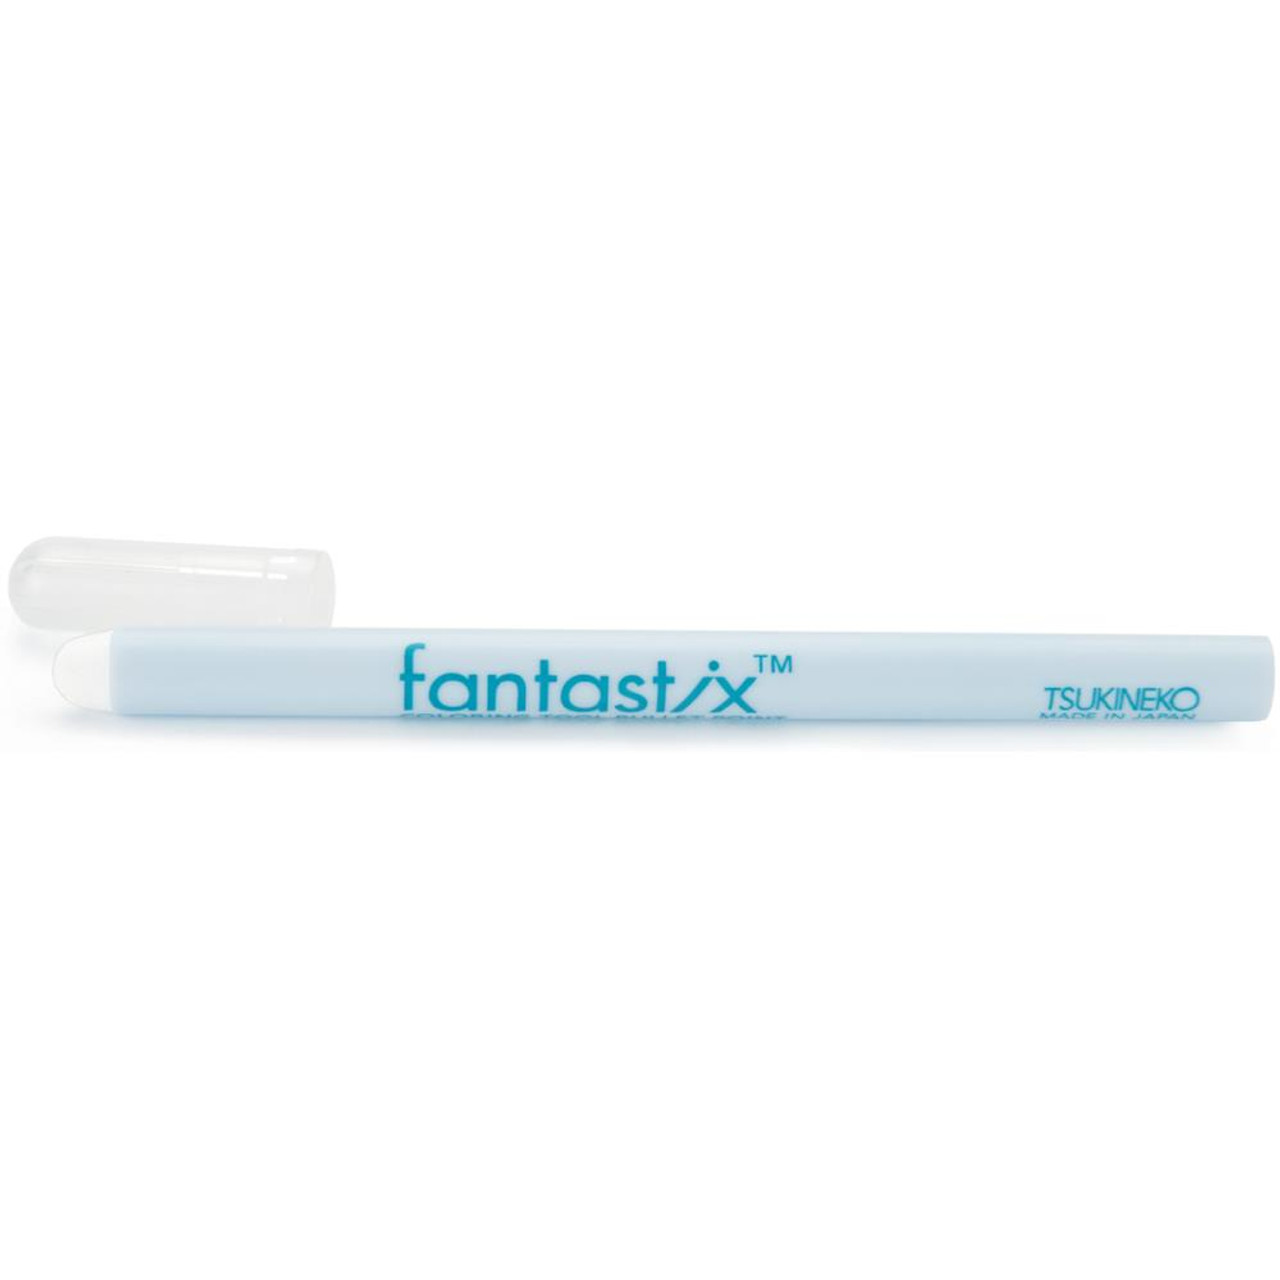 Tsukineko Fx006-300 Fantastix Coloring Tool for Wet & Dry Media - 6 pack